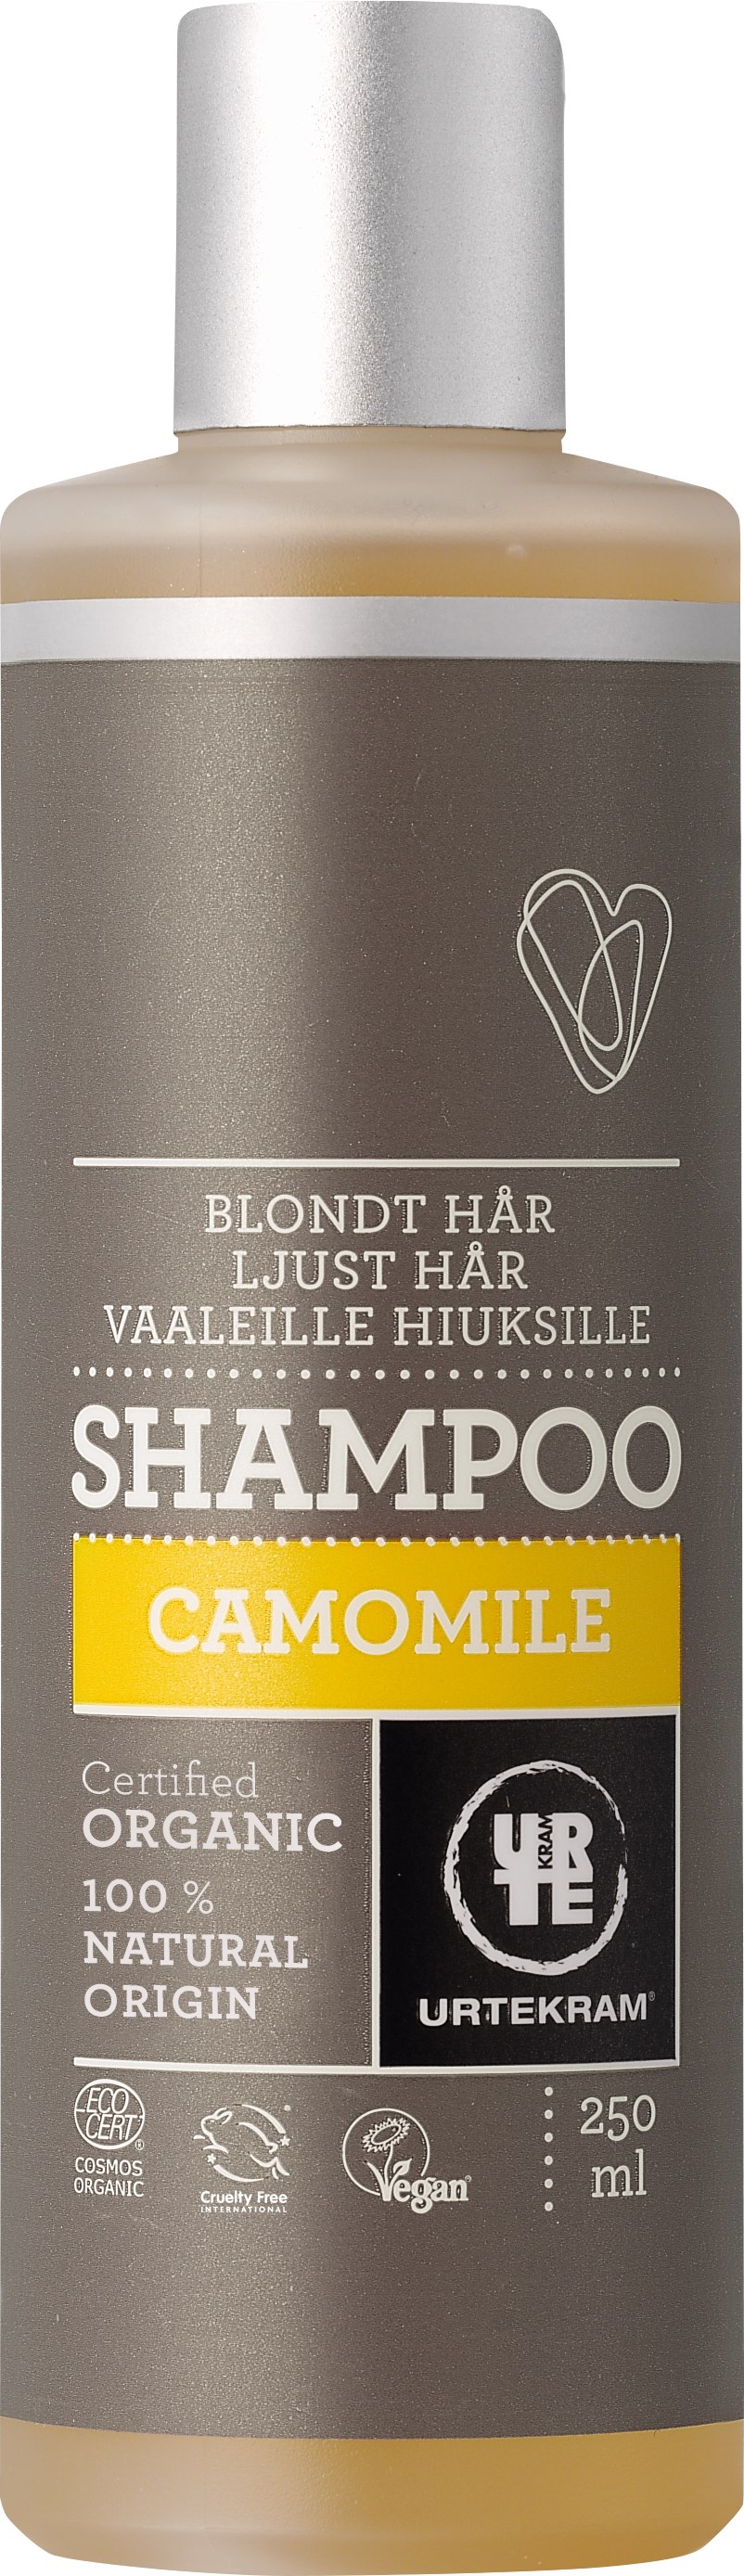 Urtekram Camomille Shampoo Blond Hair 250ml